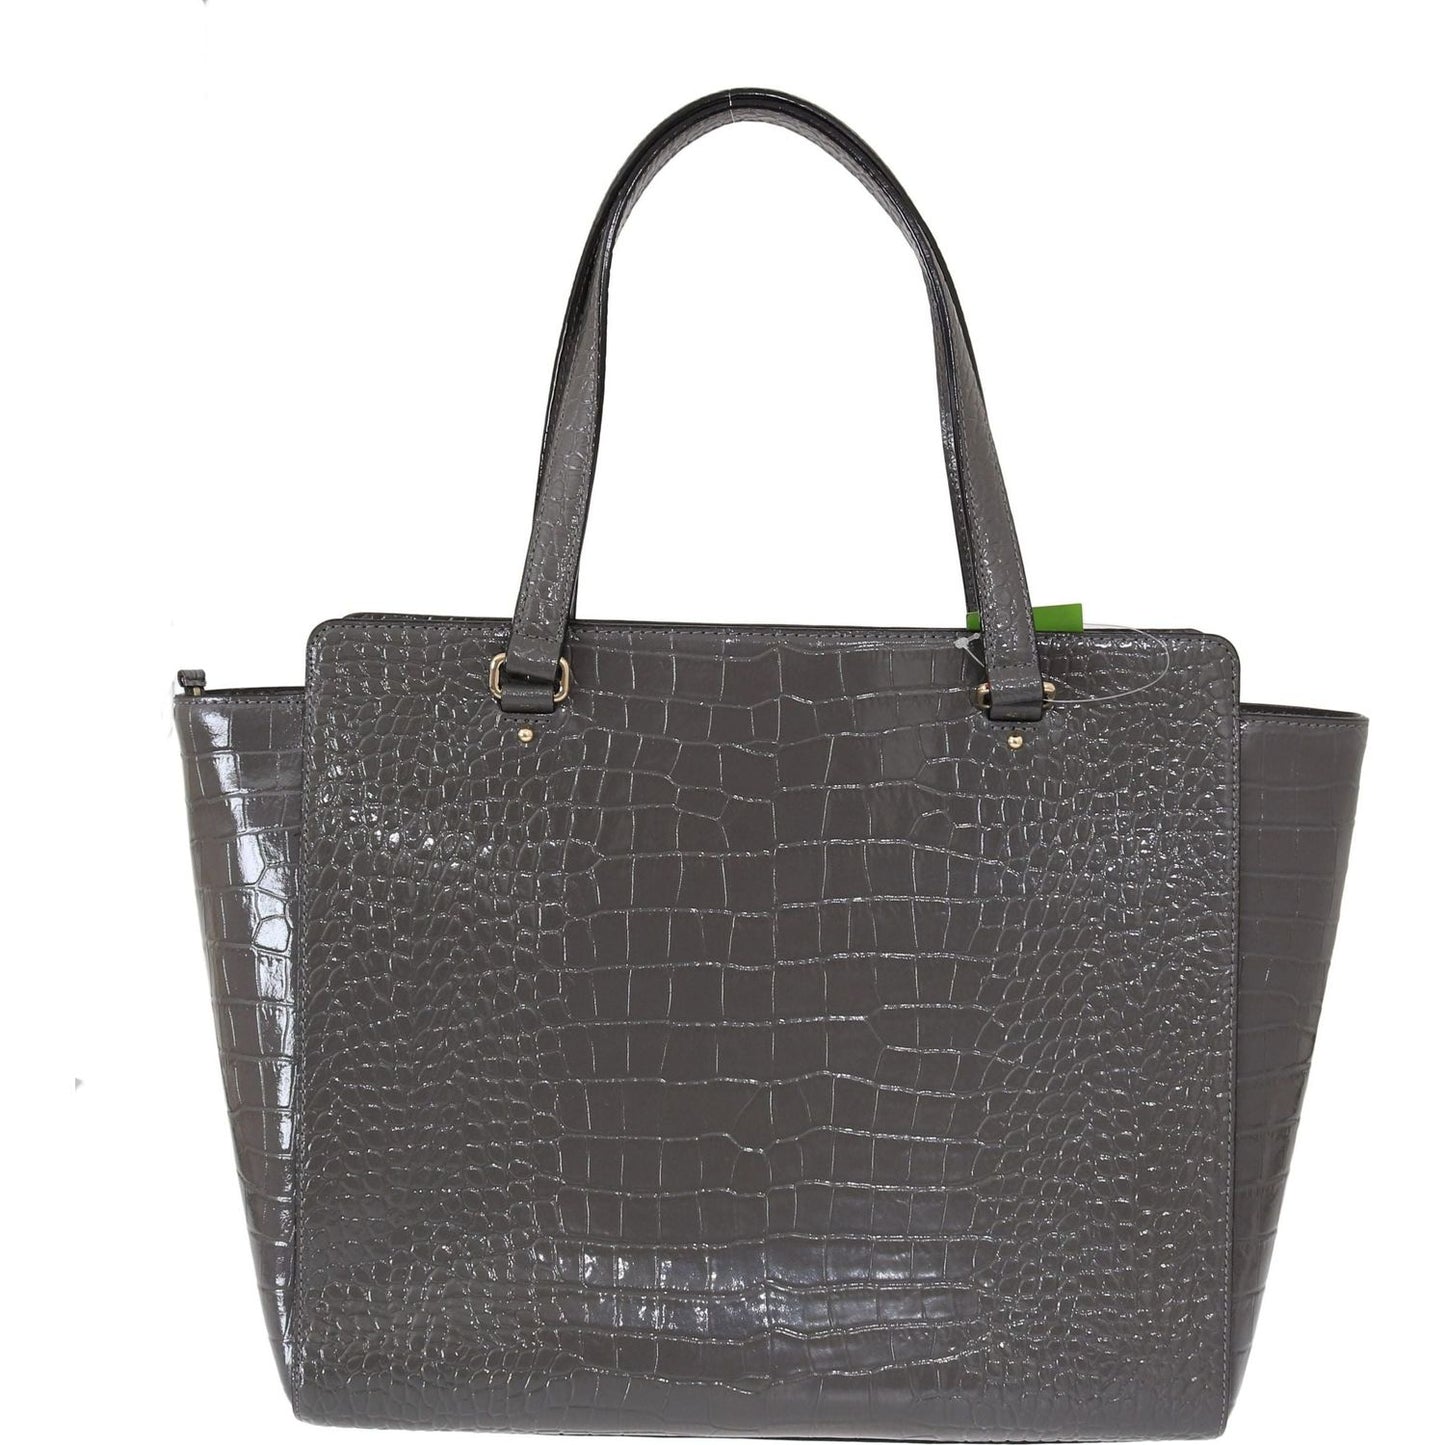 Kate Spade Chic Elissa Gray Leather Handbag WOMAN HANDBAG gray-elissa-bristol-drive-croc-hand-bag